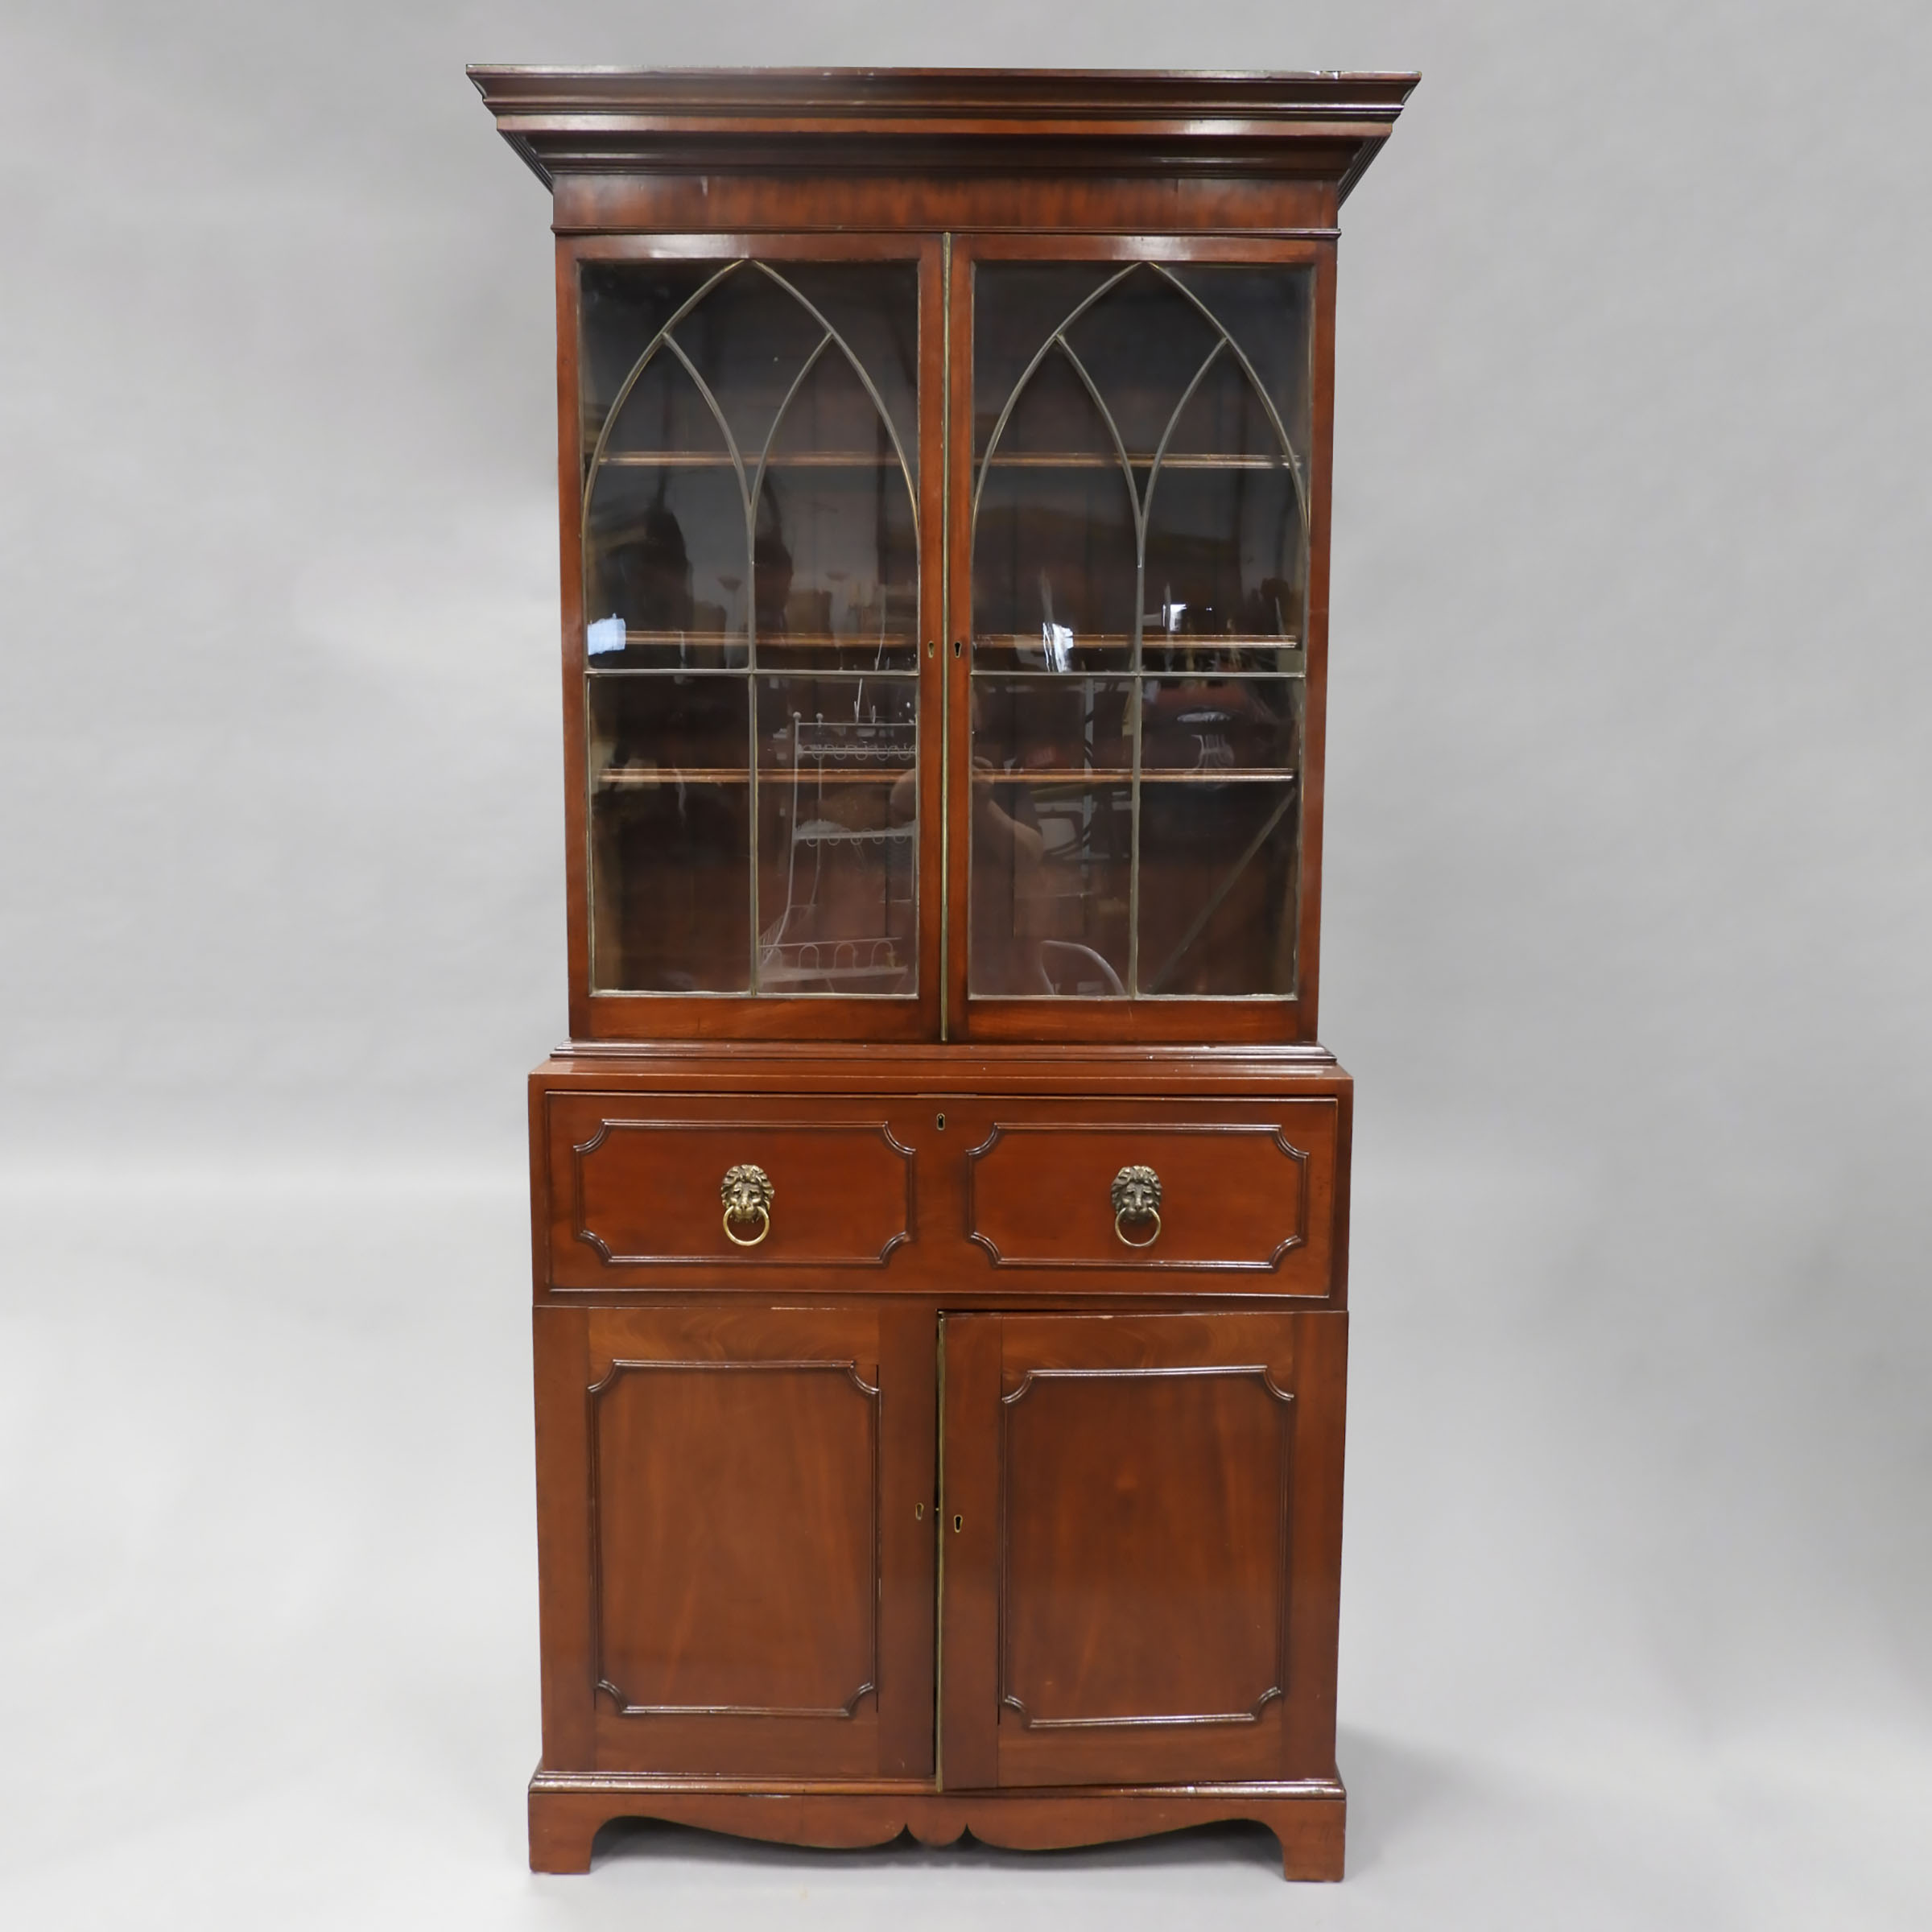 Victorian Gothic Revival Mahogany Secretaire Bookcase, mid 19th century